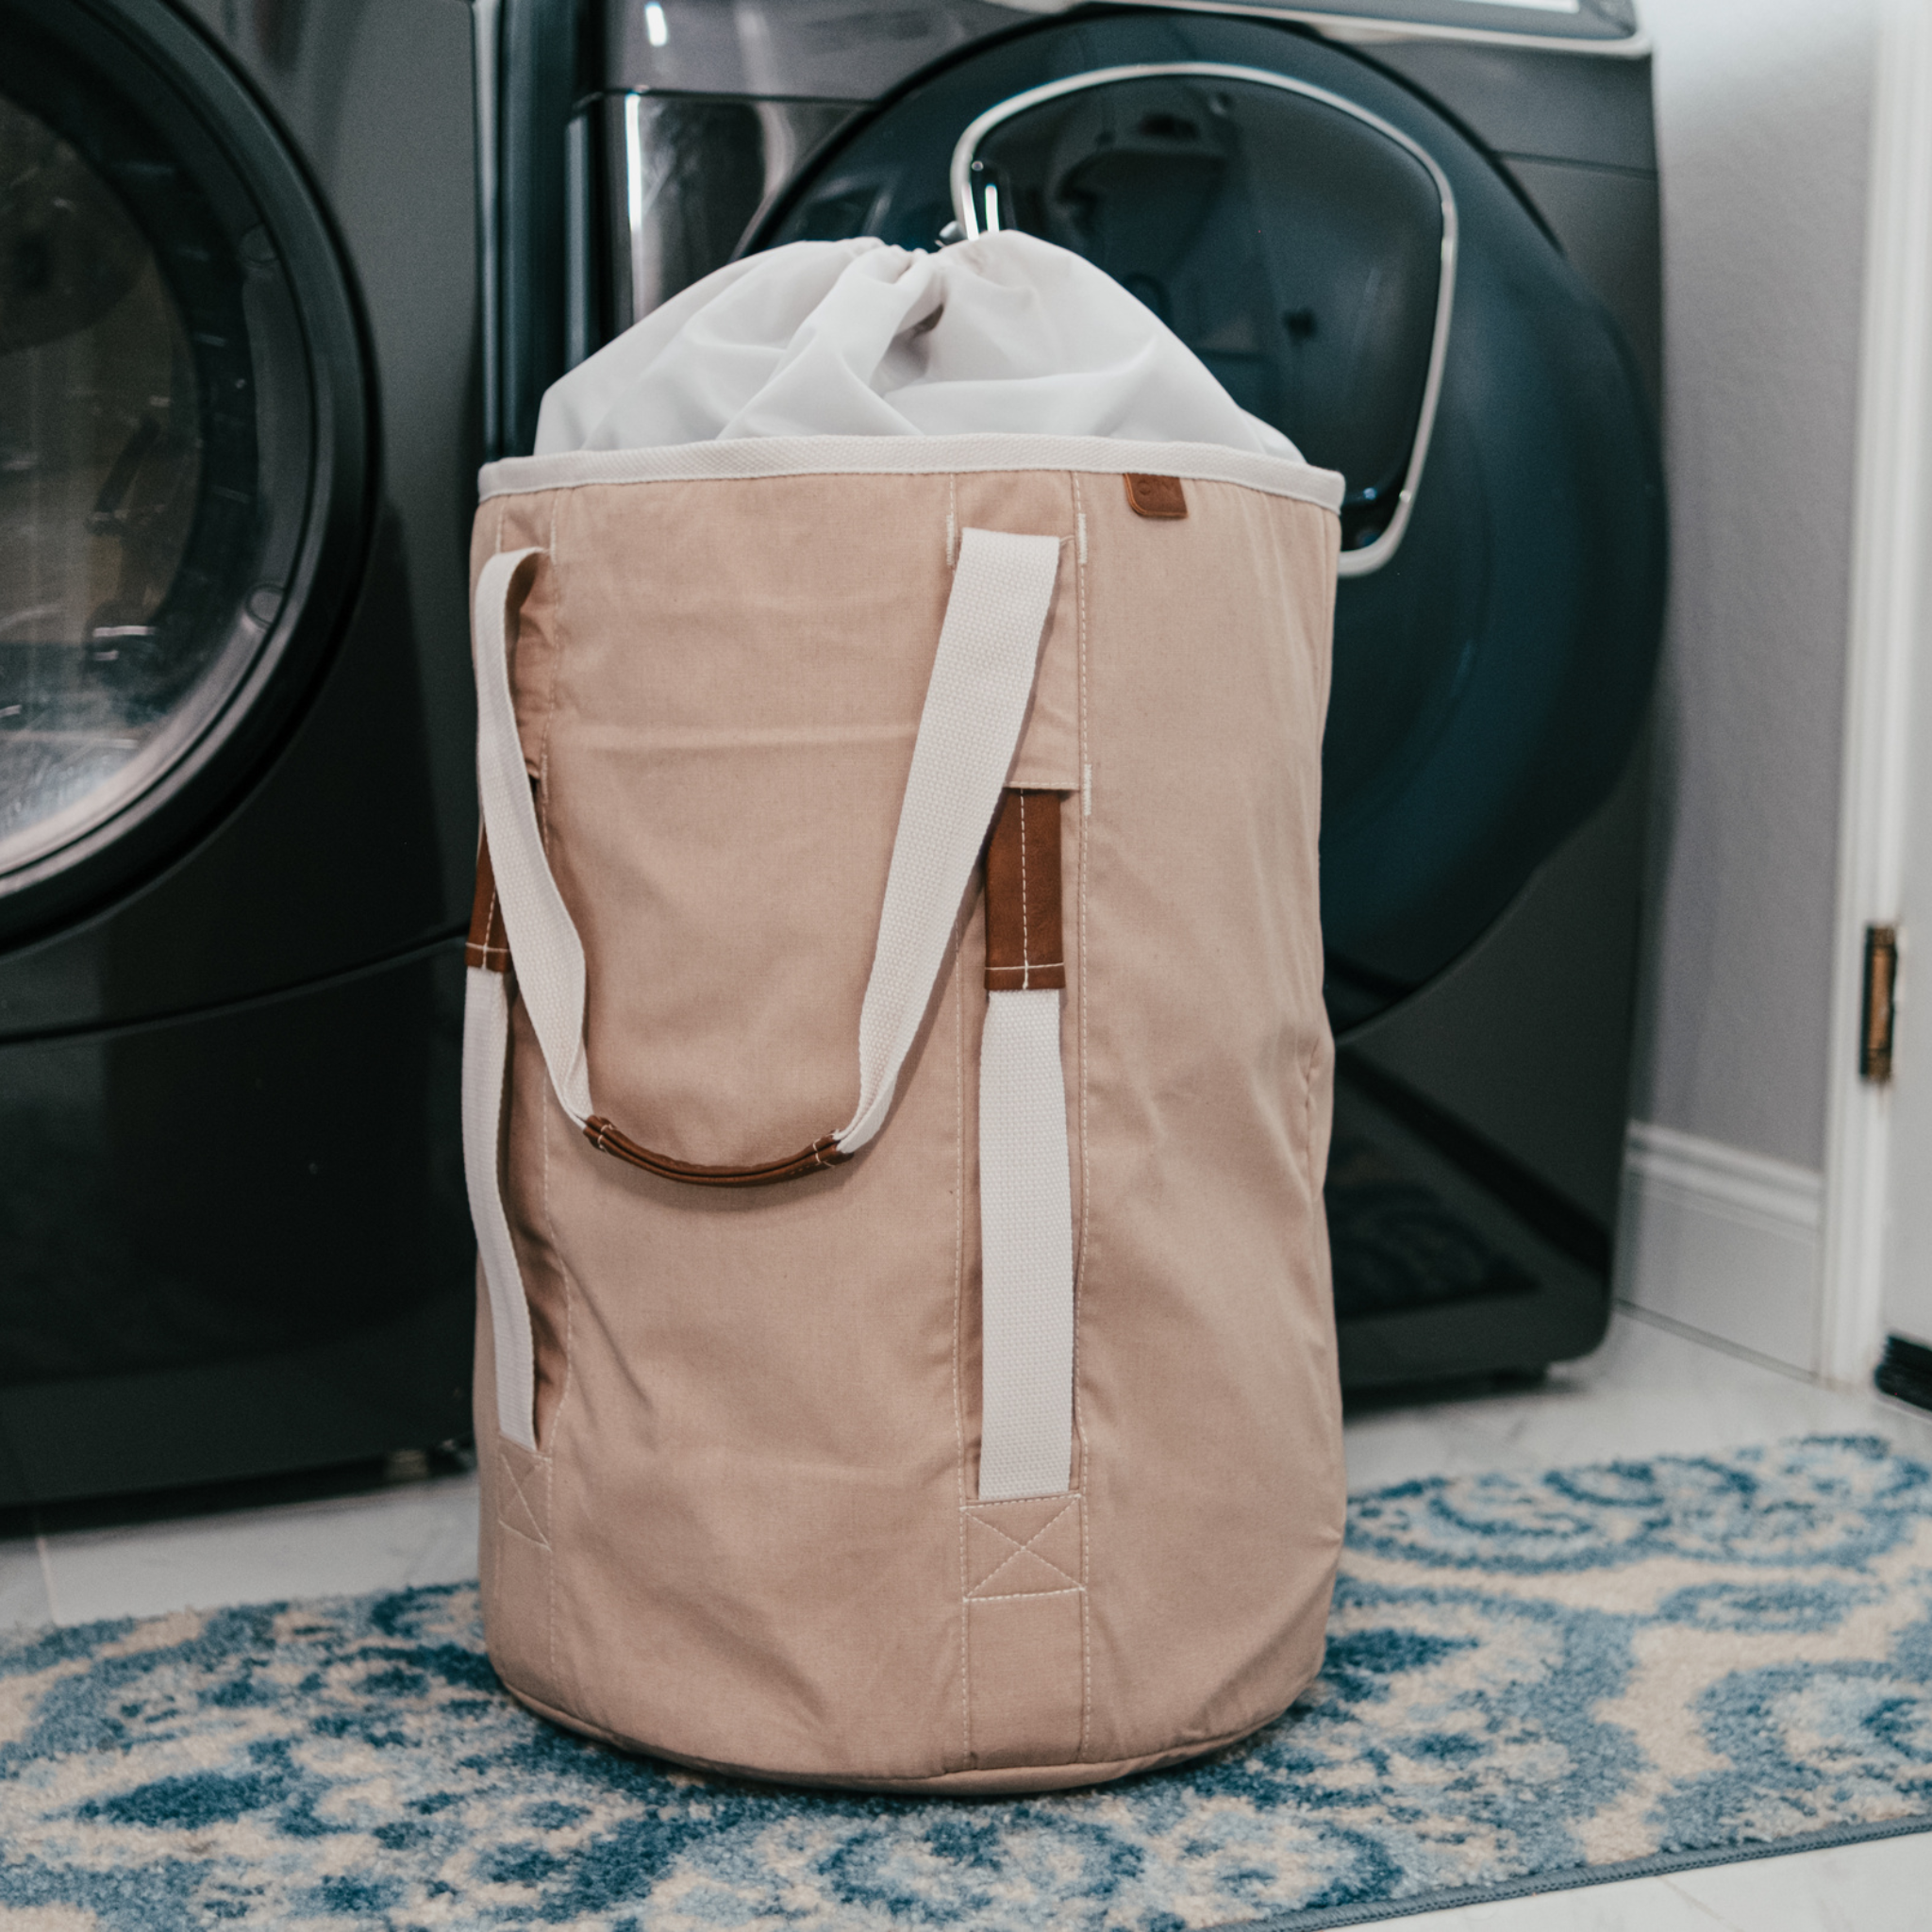 Monogram Laundry Duffel Bag, Custom Canvas Hamper